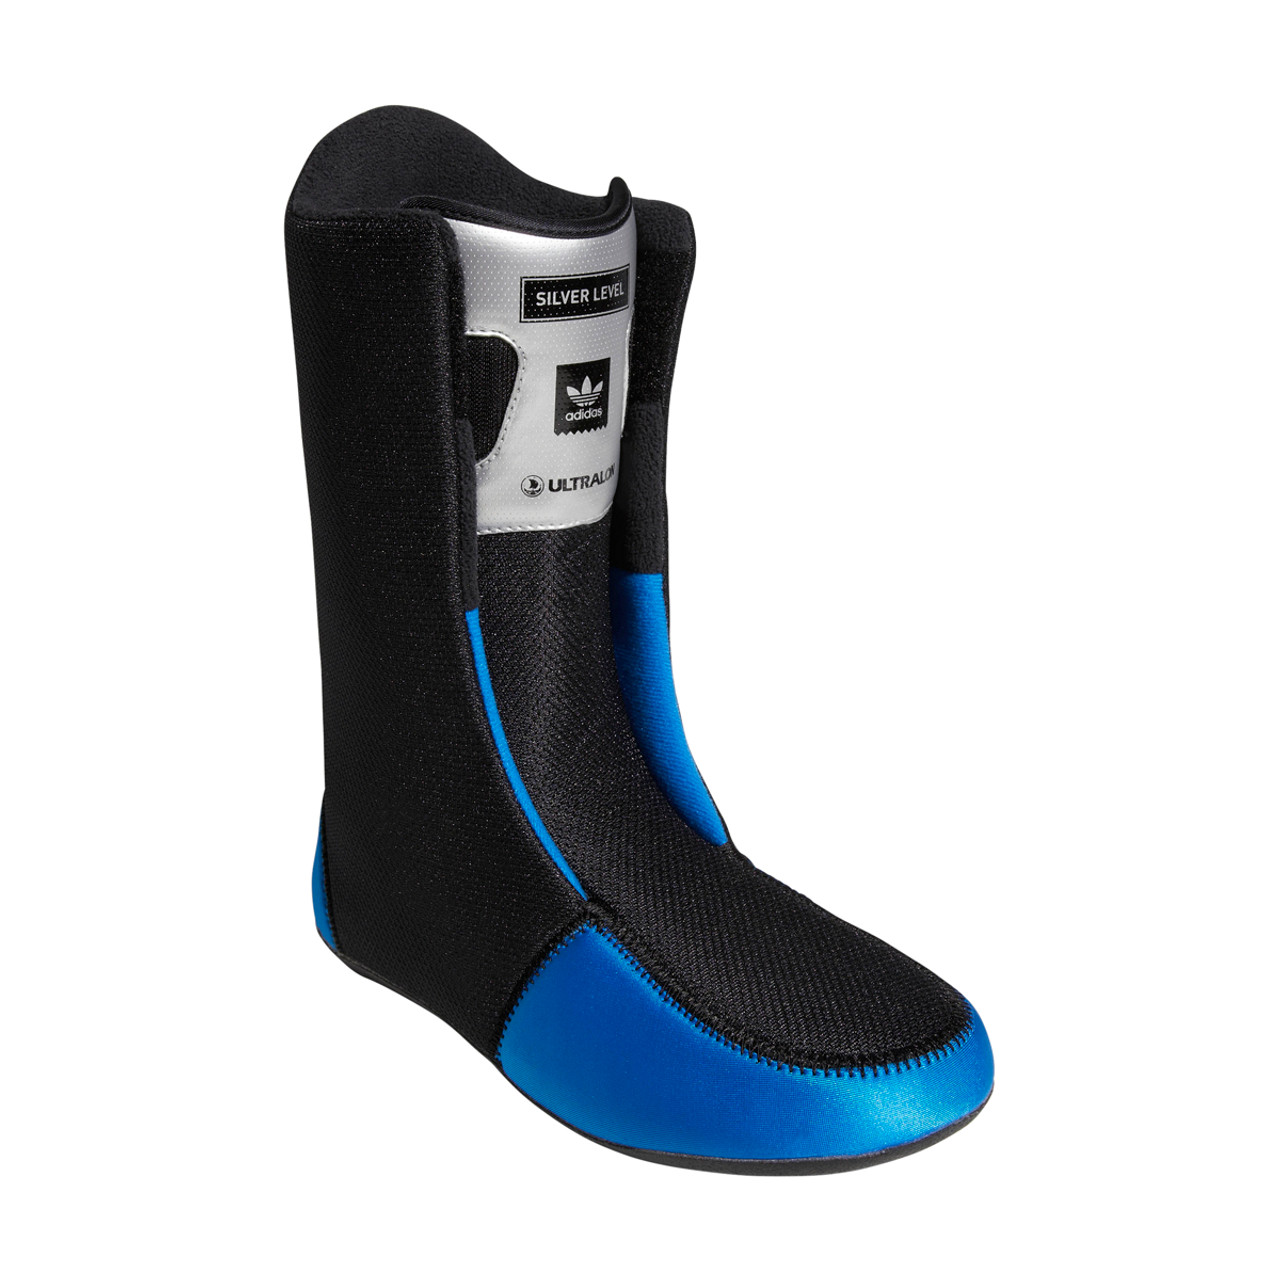 adidas samba snowboard boots 2019